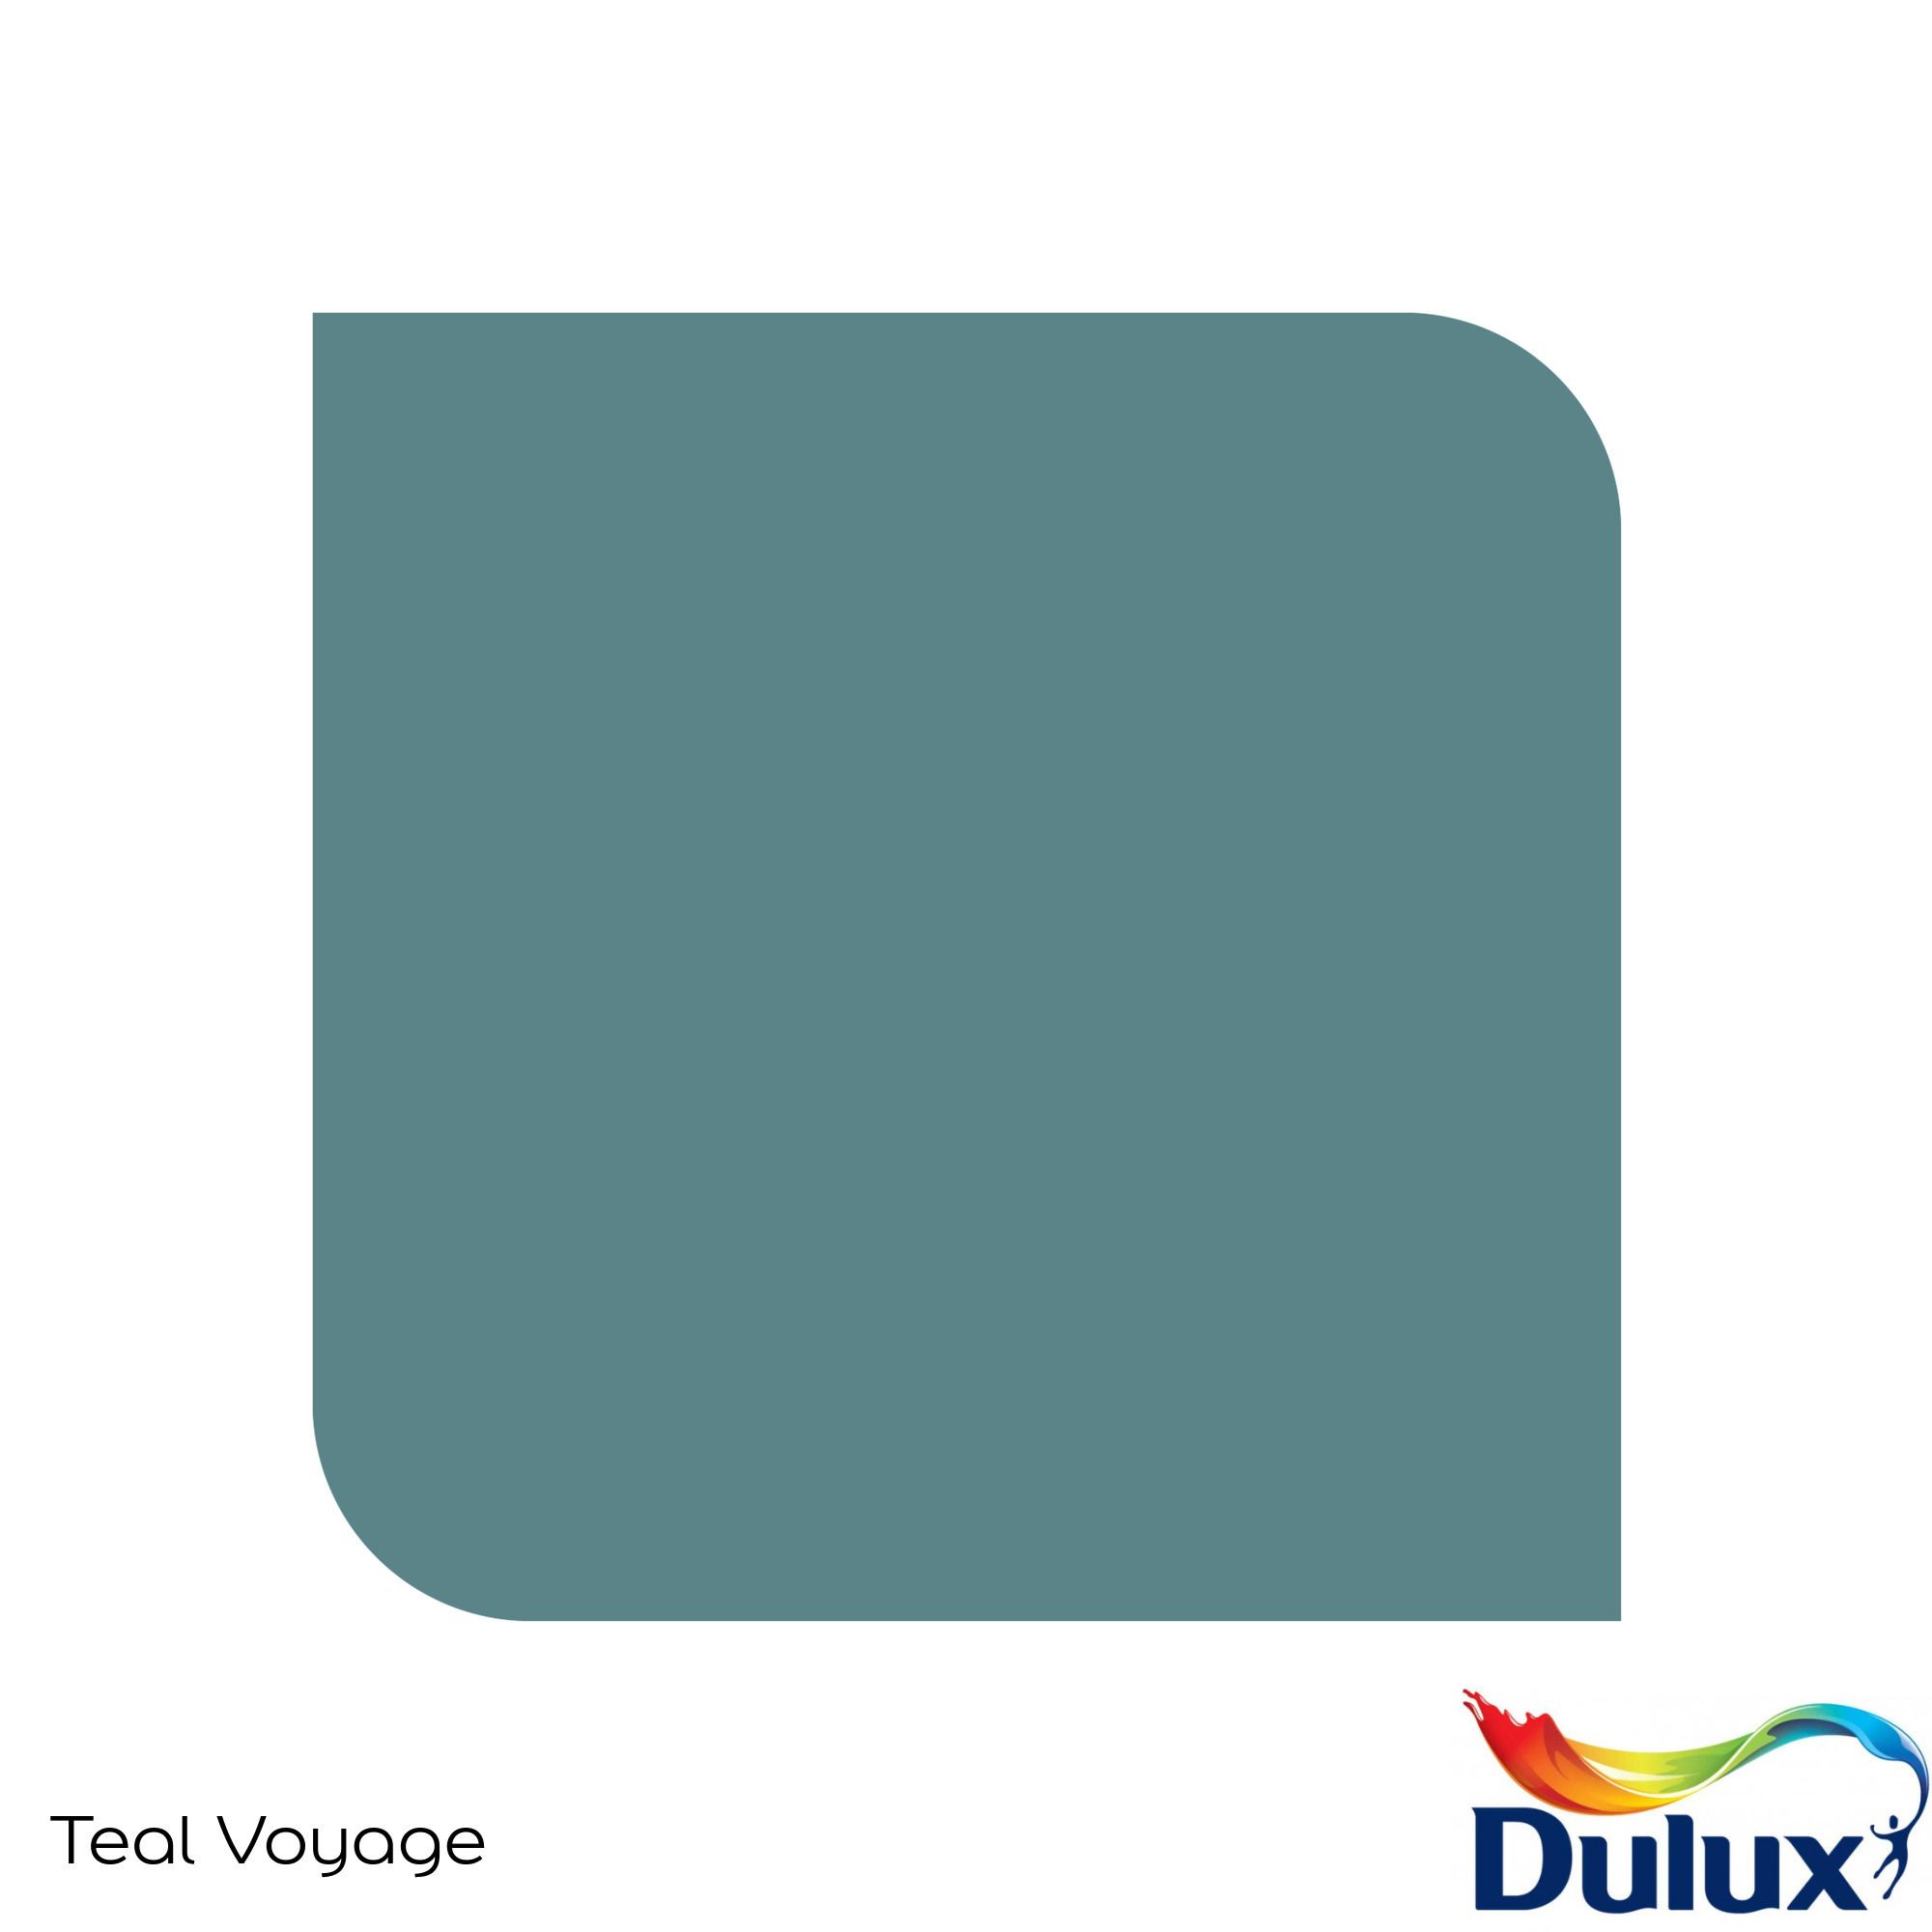 Dulux Easycare Washable & Tough Teal Voyage Matt Wall paint, 30ml